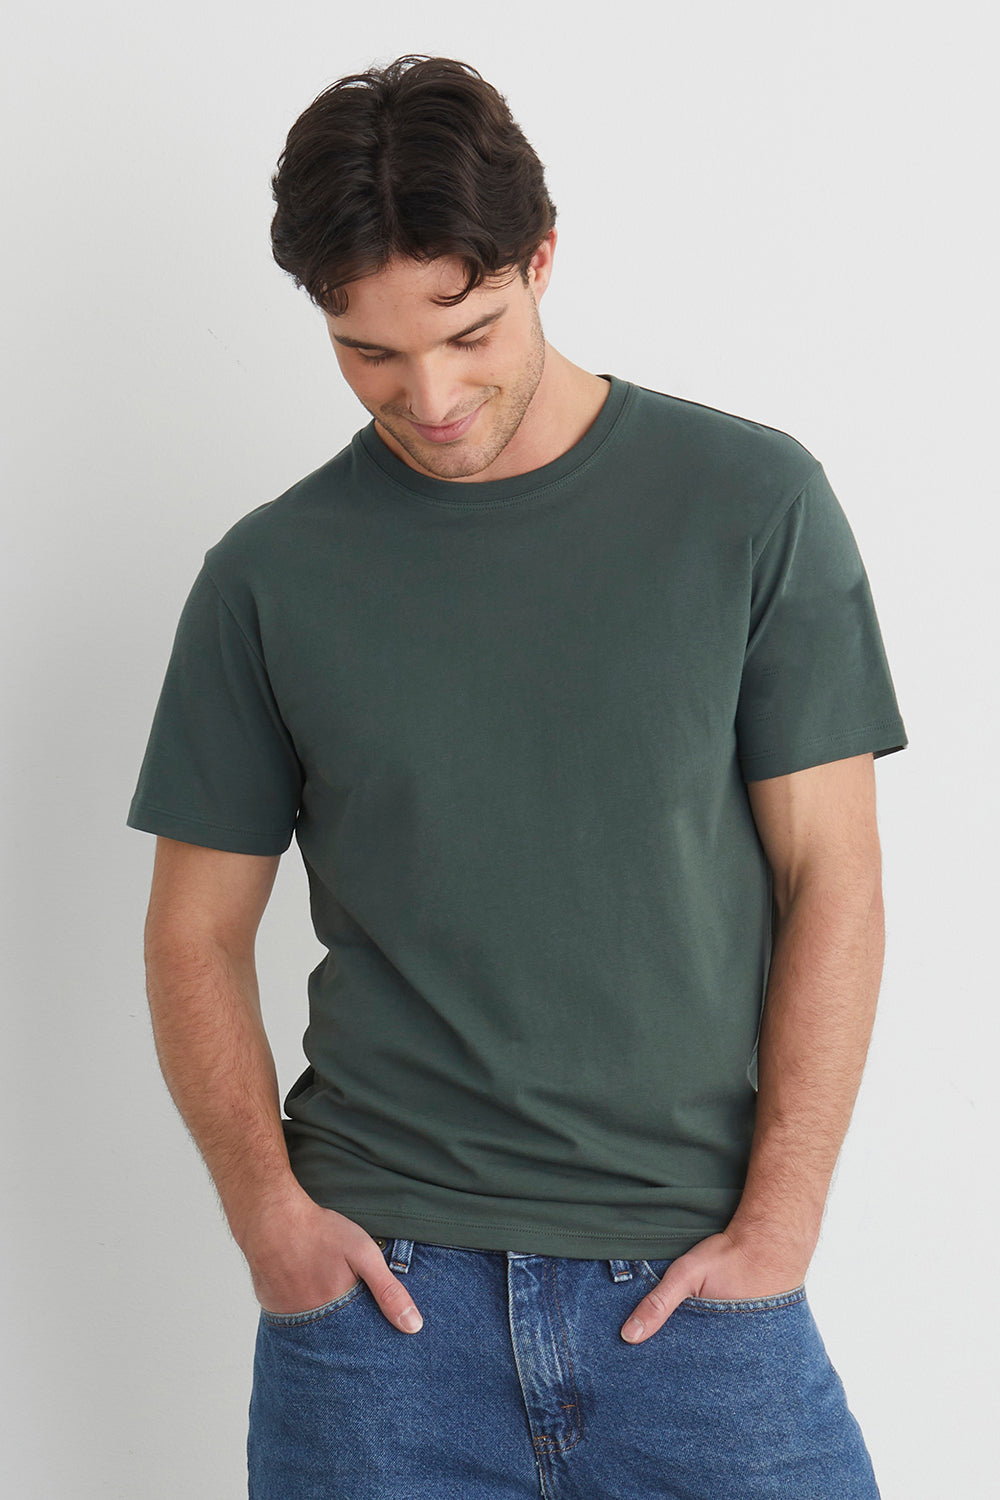 Maxcatch 100% Cotton Fly Fishing T Shirt Men Causal O-neck Basic Outdoor T- shirt